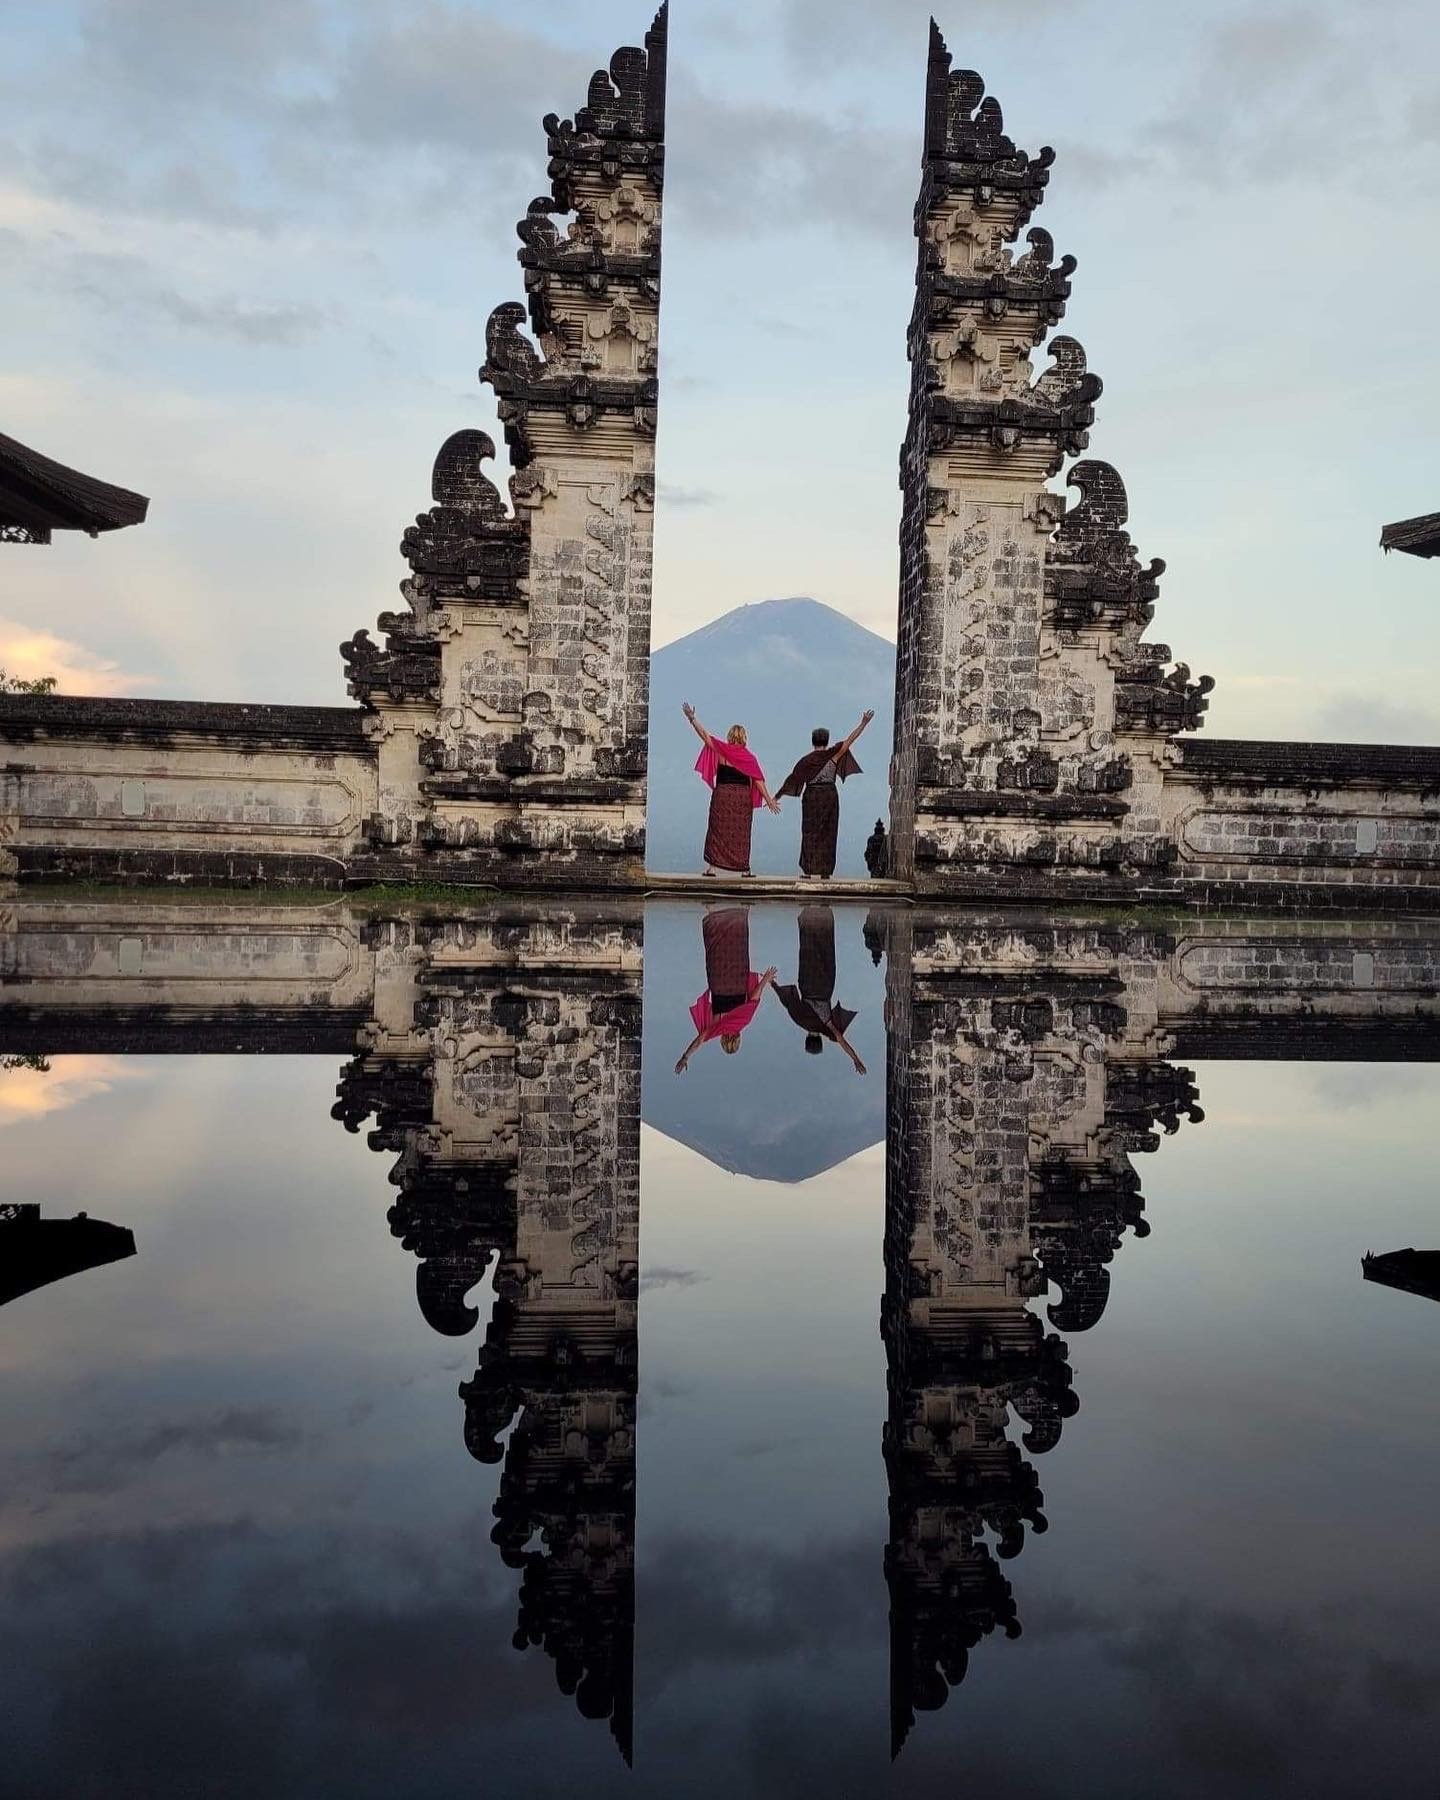 Heavens Gate - Bali Accommodation, Tours, Transport & Bali Guide